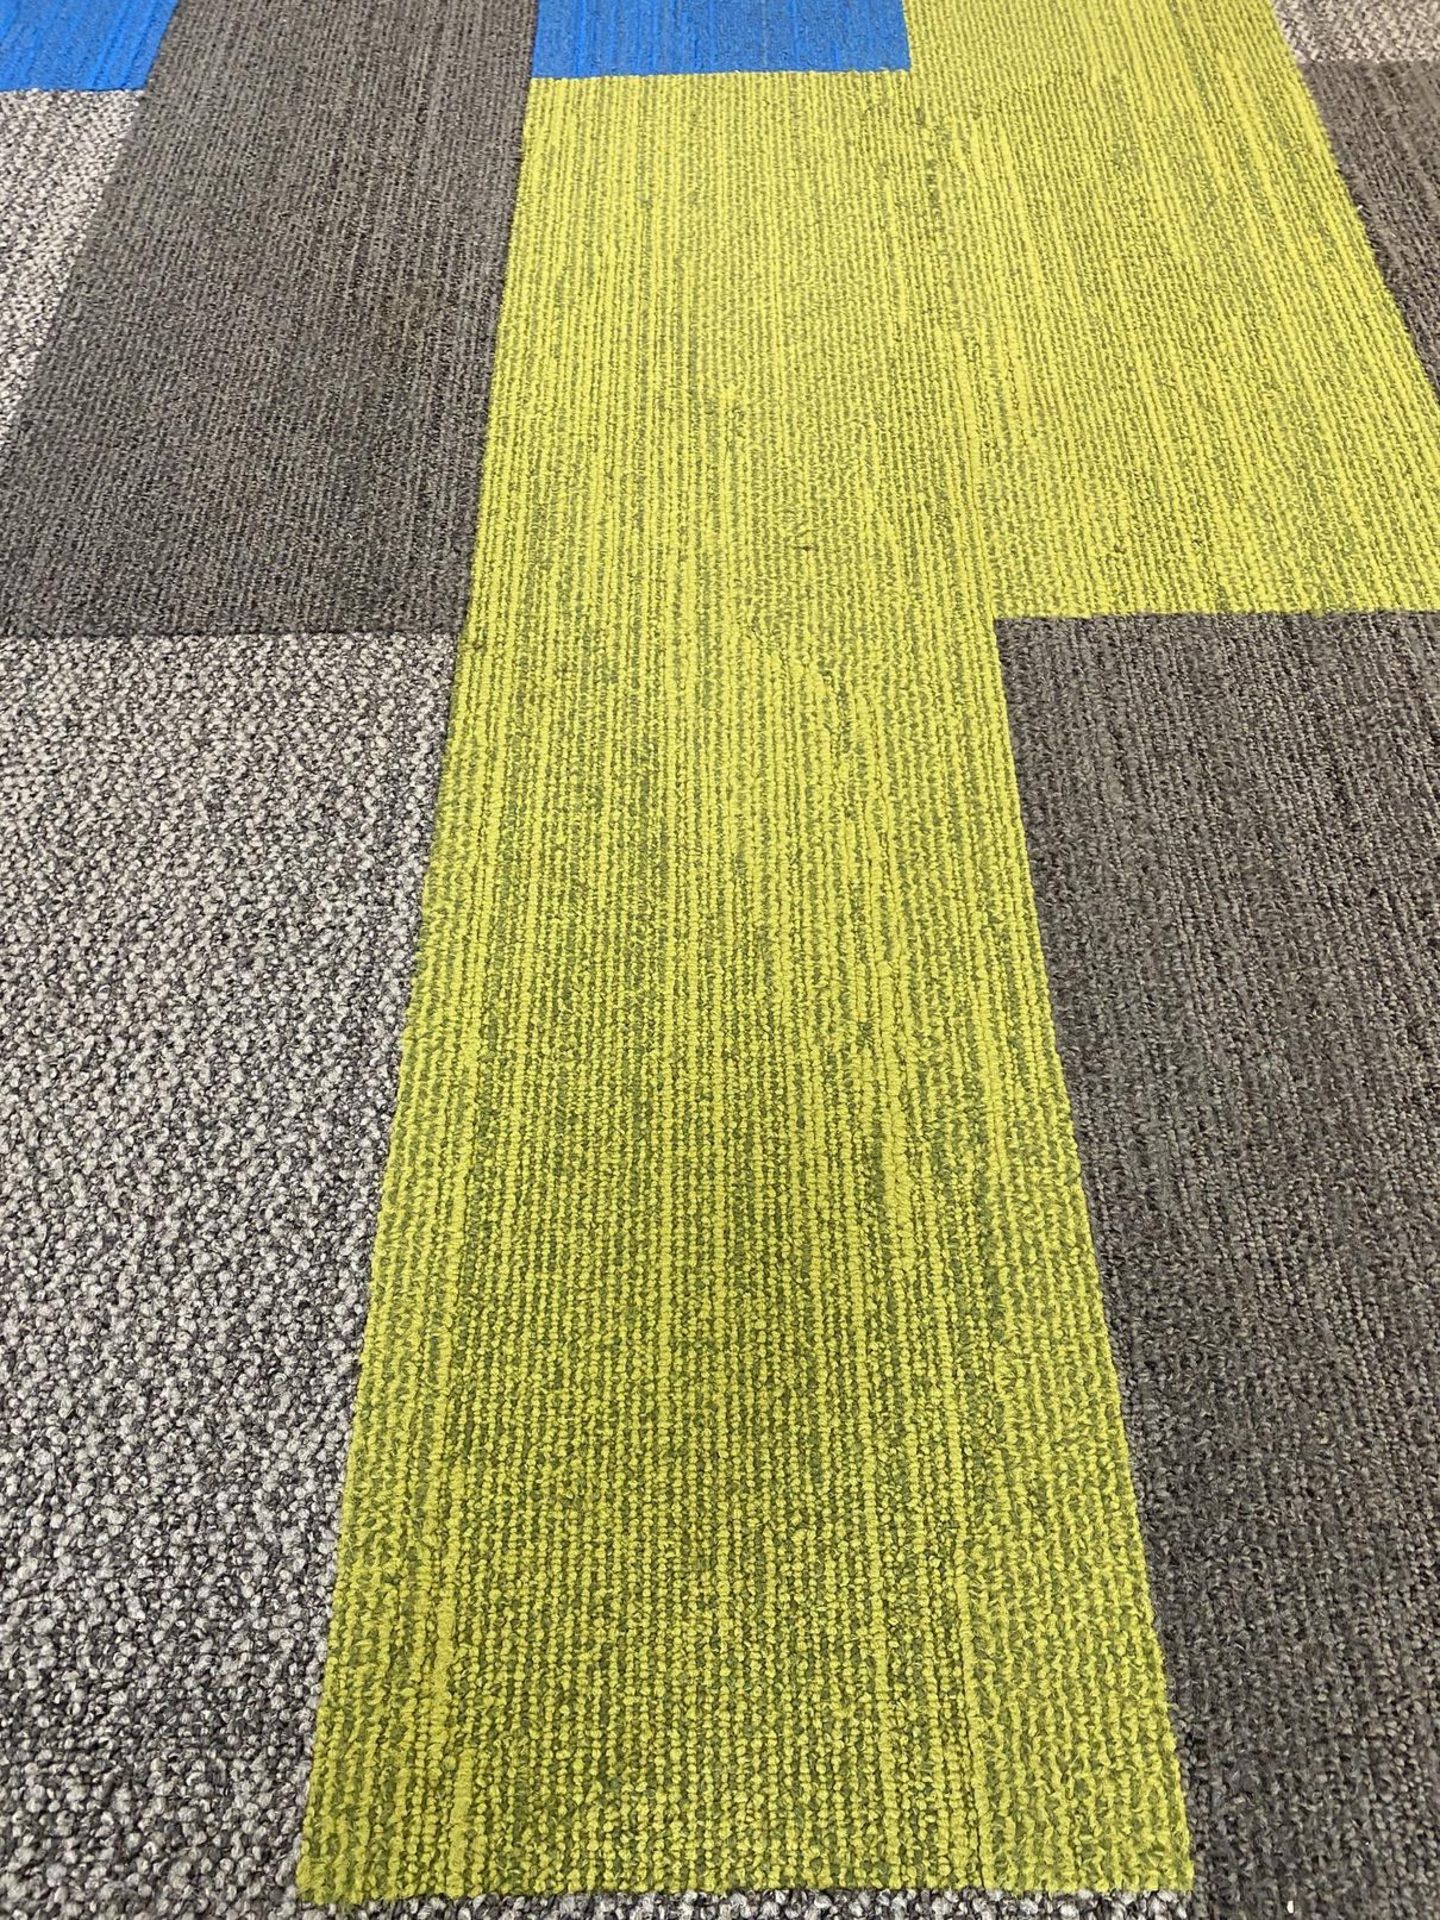 65 x green rectangular carpet tiles + - Image 2 of 2